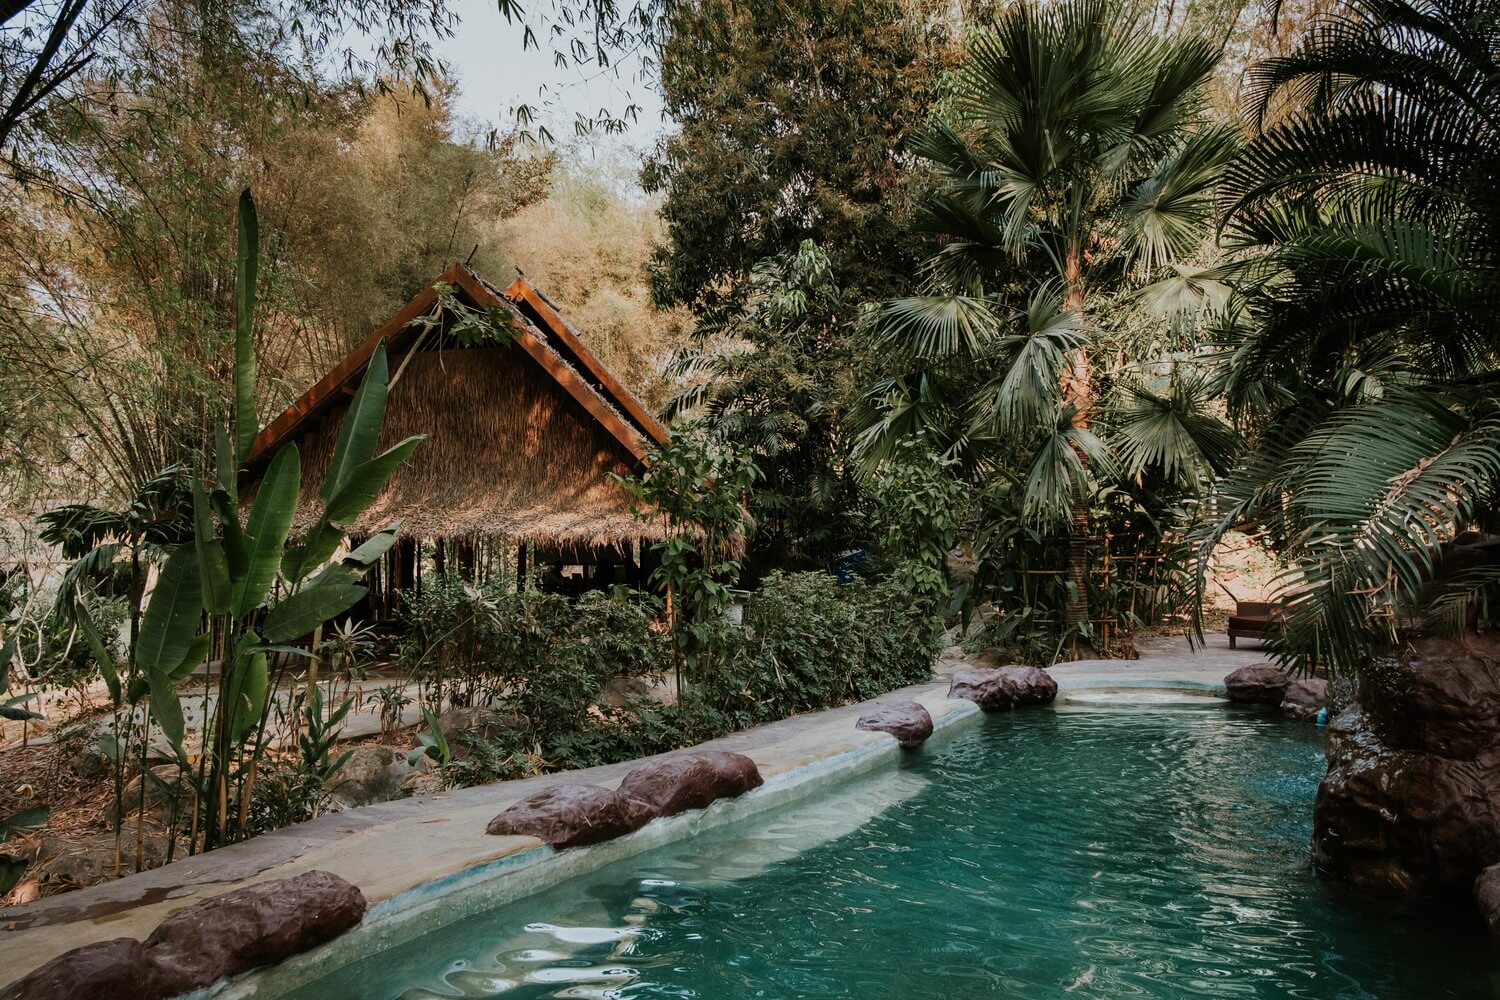 A serene pool nestled amidst the lush greenery of Luang Prabang.